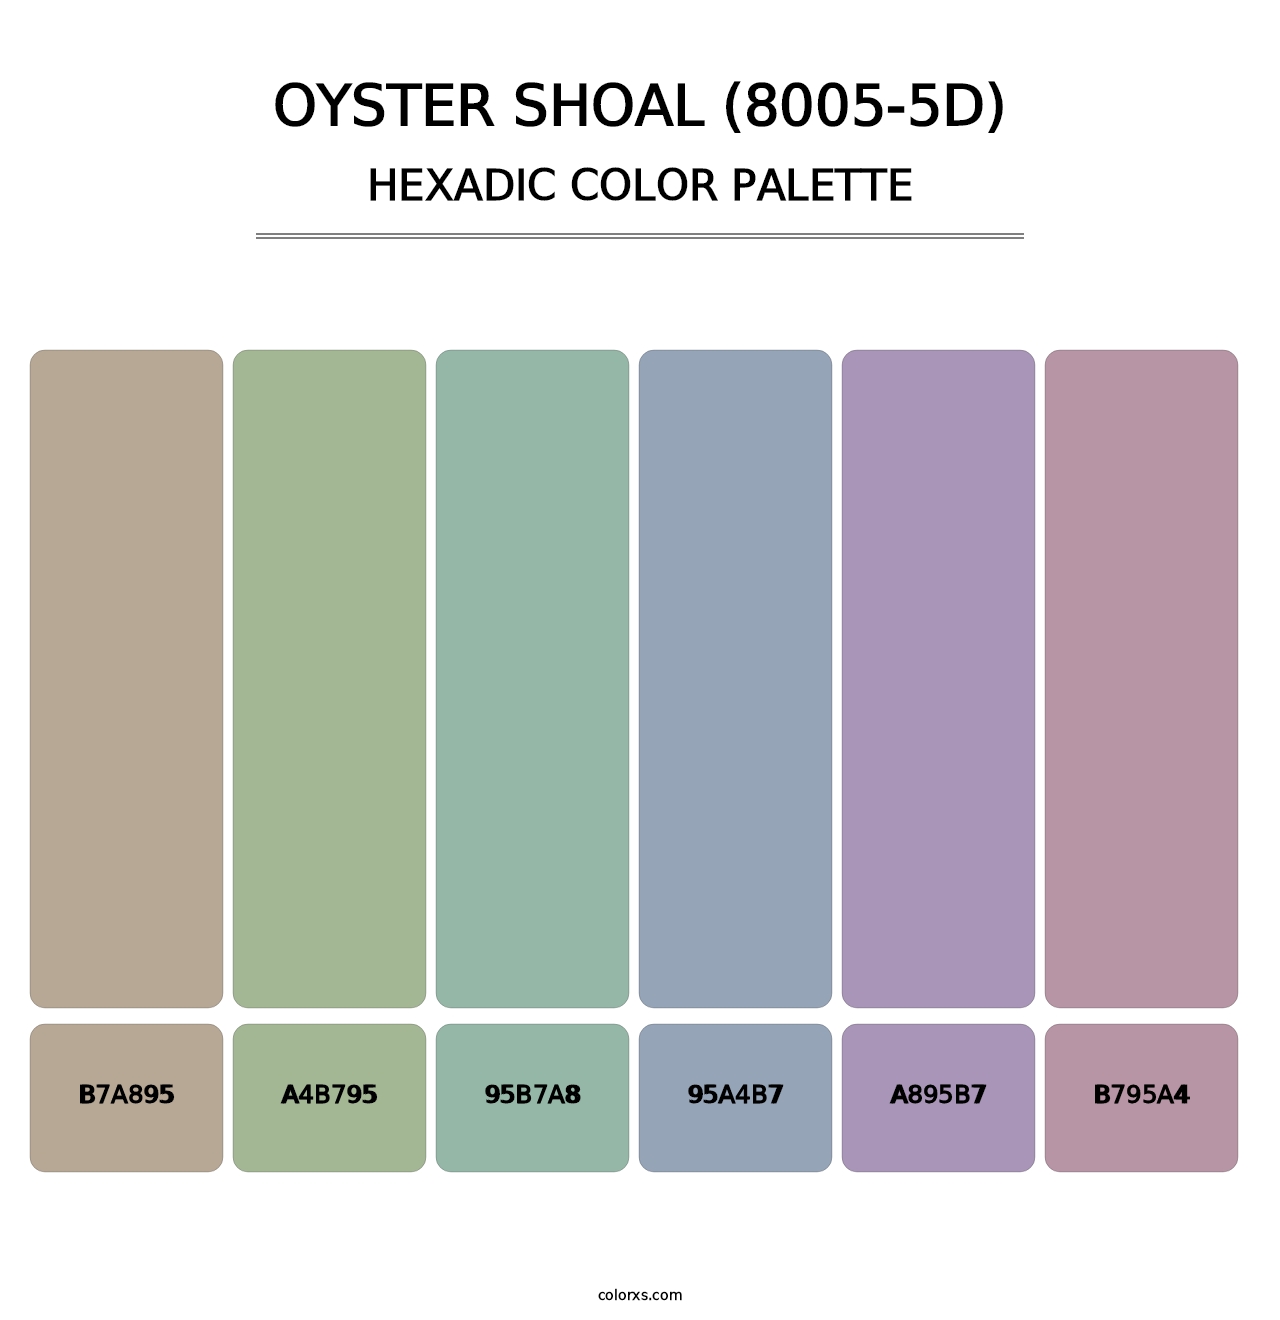 Oyster Shoal (8005-5D) - Hexadic Color Palette